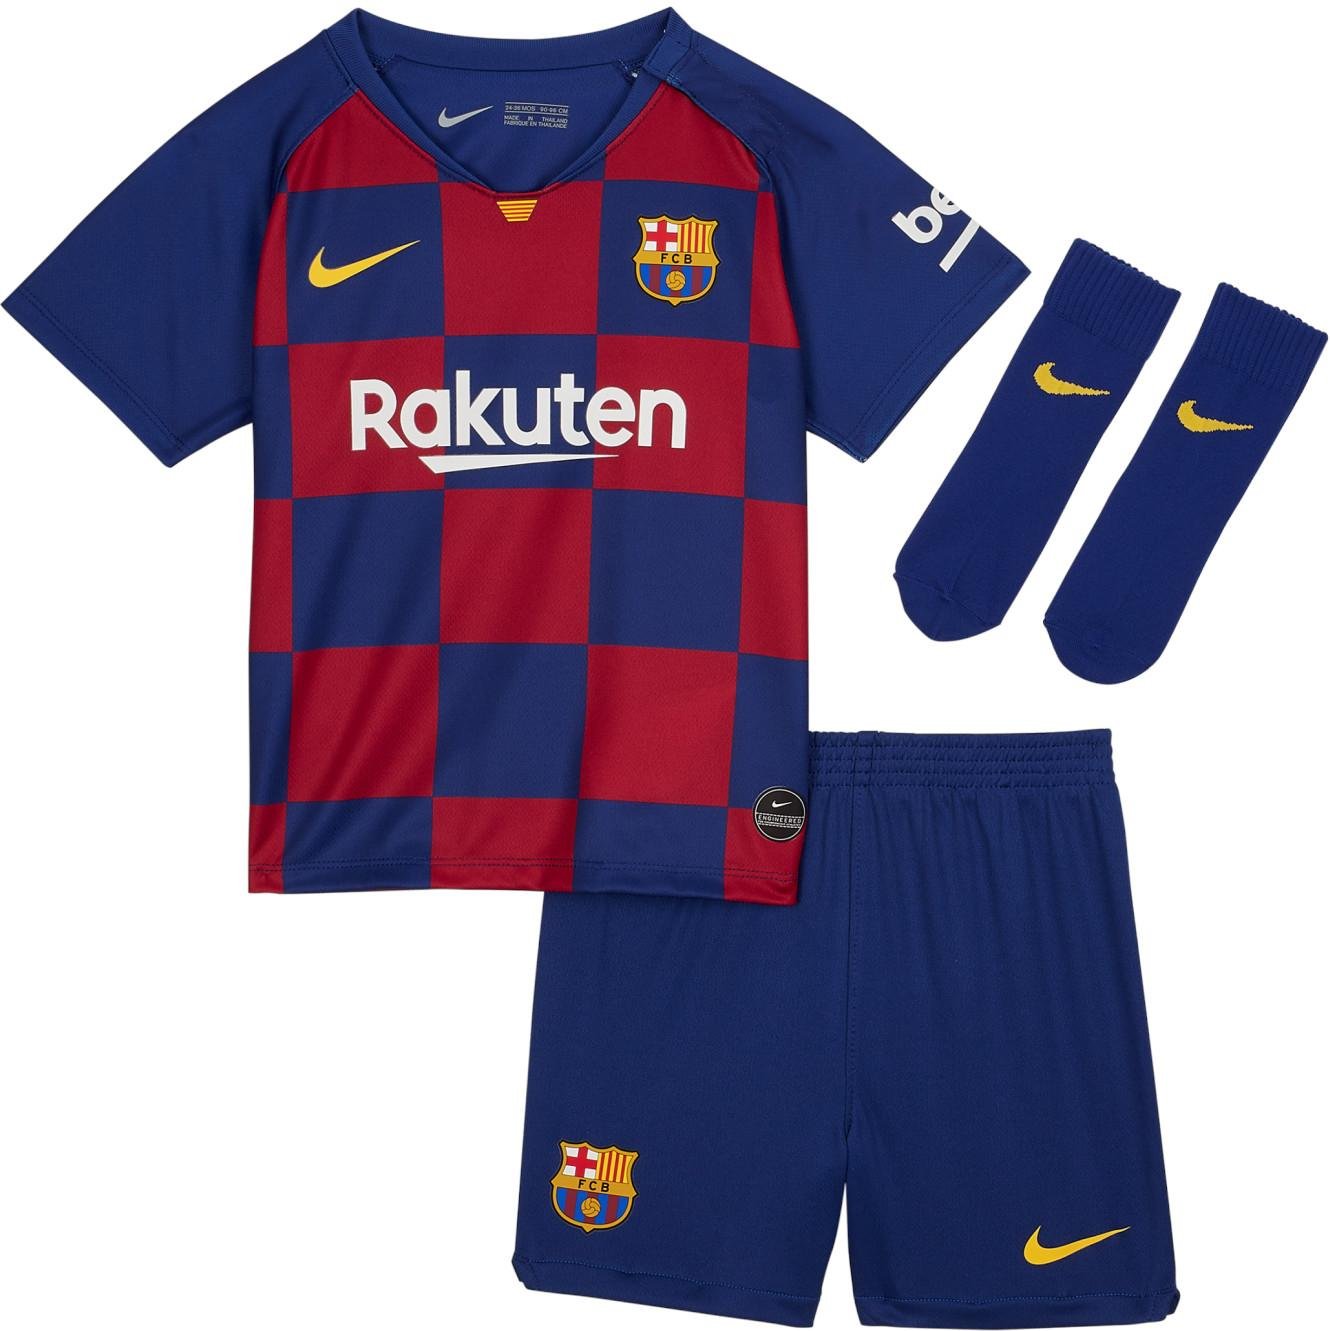 Camiseta Nike Barcelona 2019/20 Home set Baby 11teamsports.es